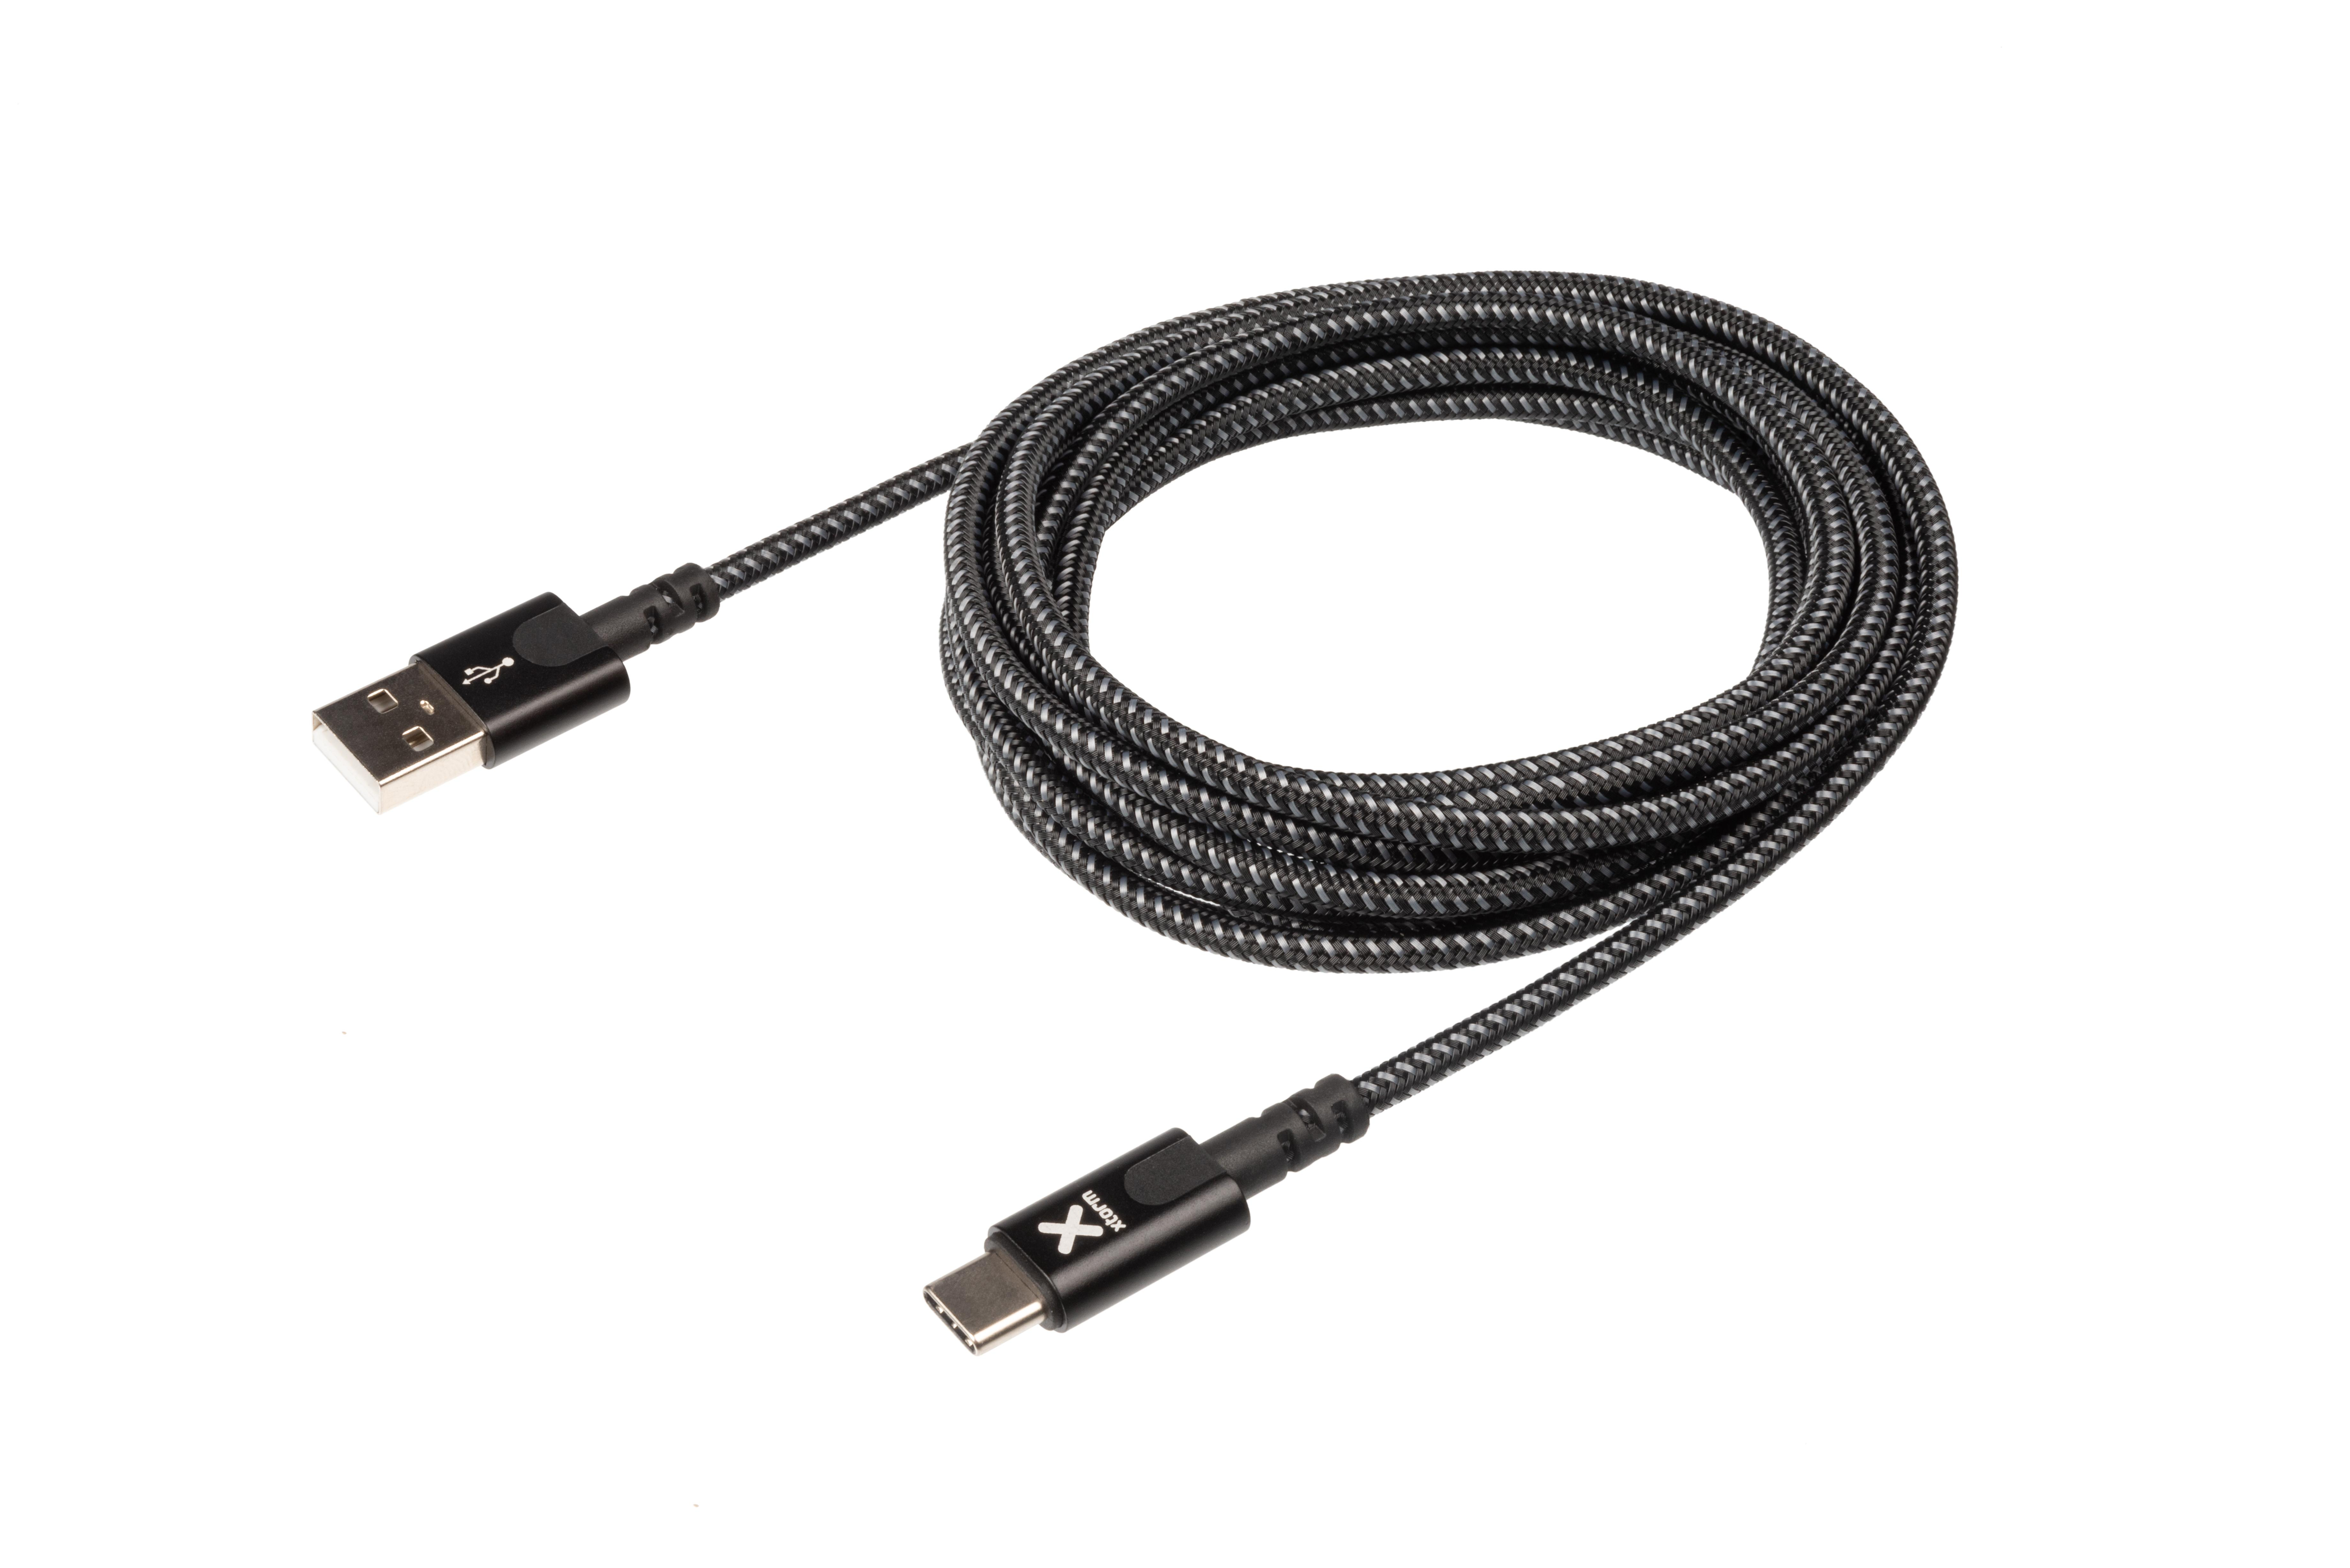 Lightning Kabel Original XTORM (1m) Kabel USB Schwarz USB auf